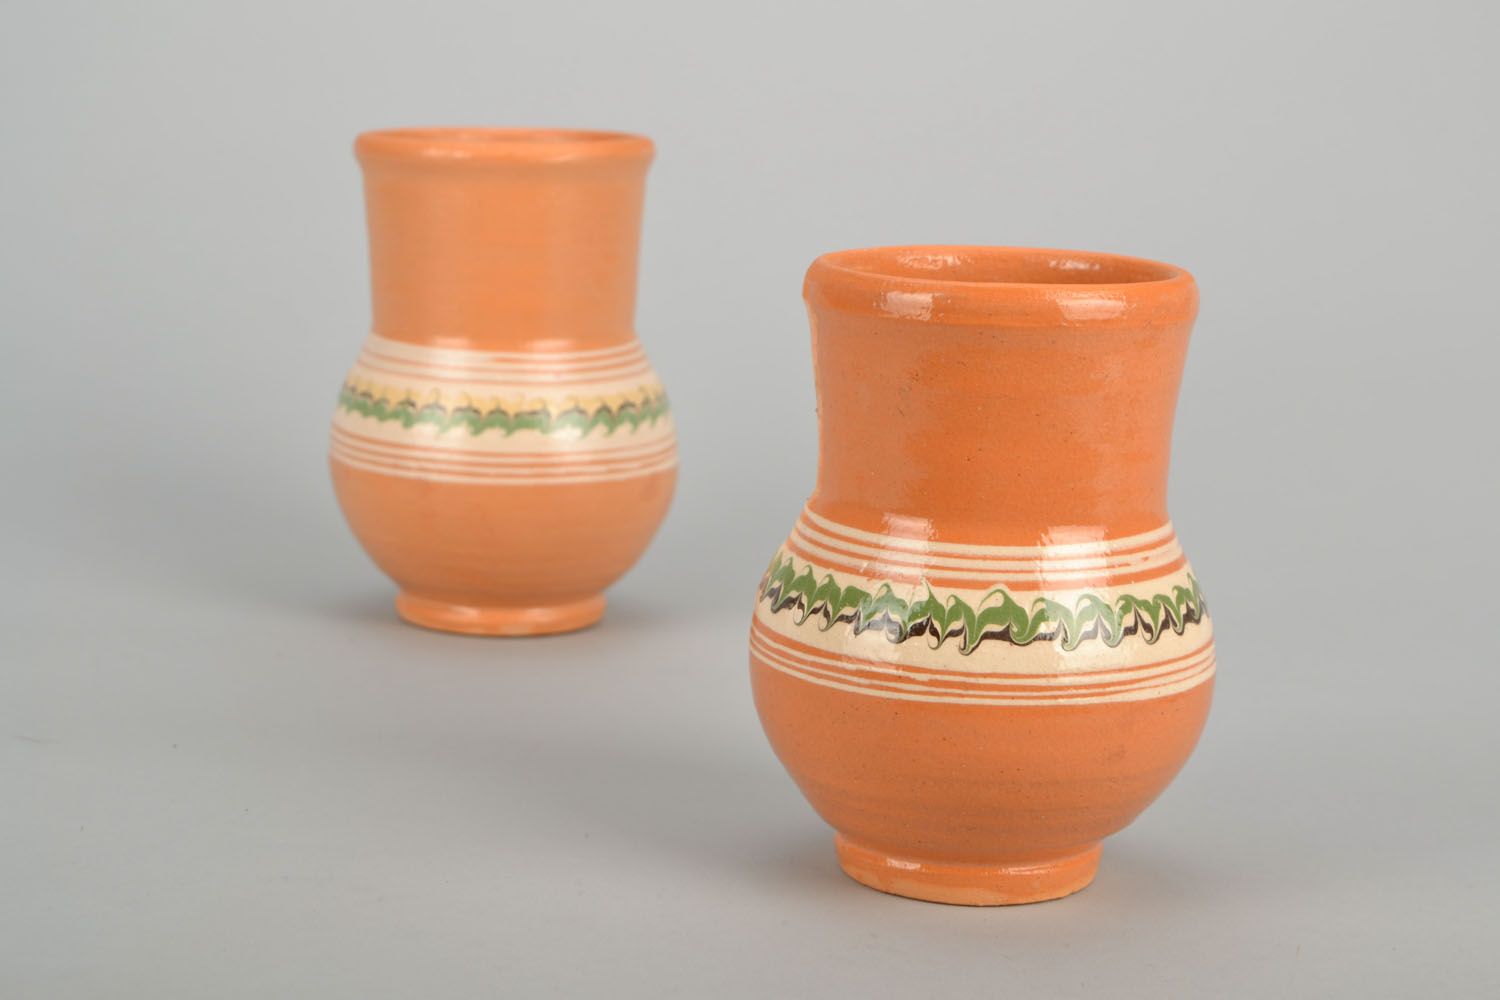 30 oz ceramic classic style milk jug in terracotta color 0,9 lb photo 1